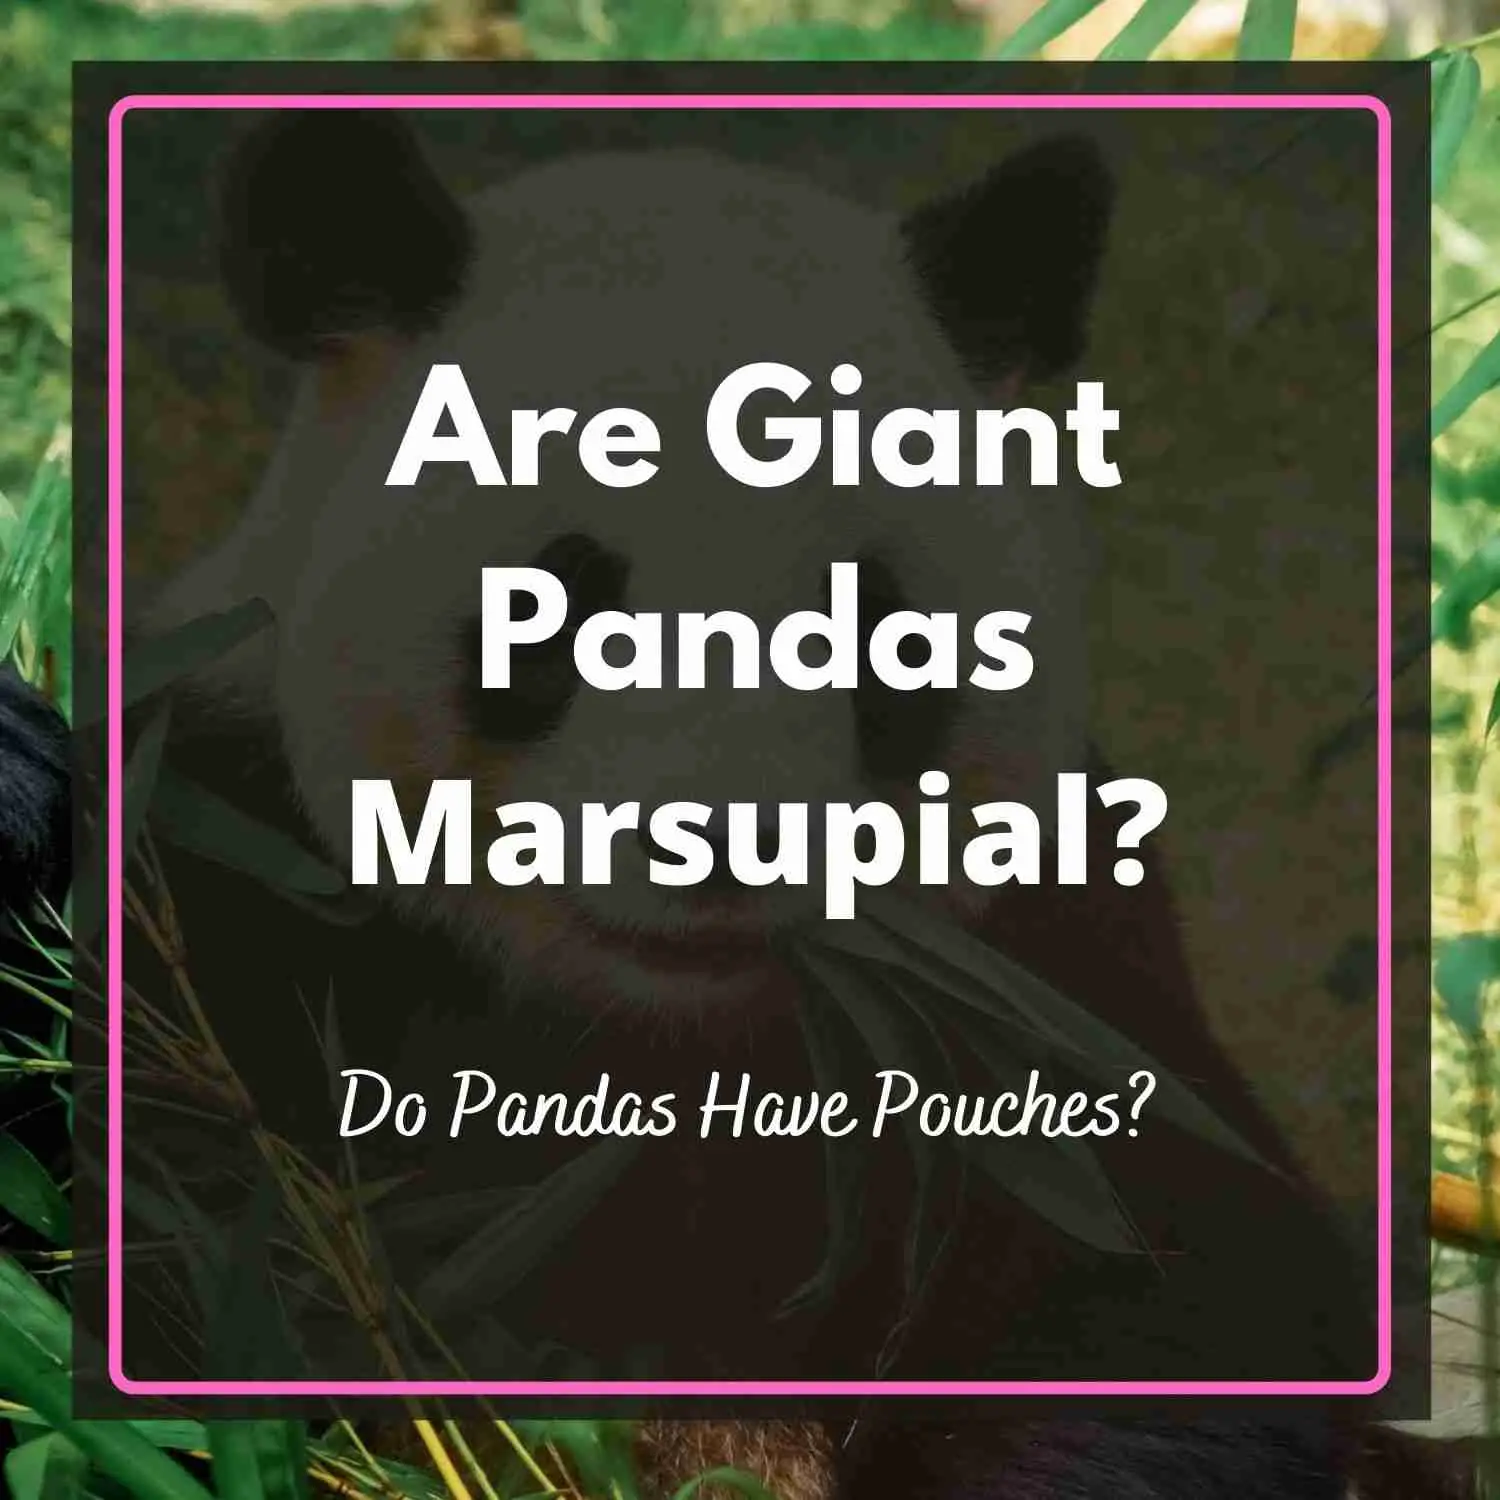 Are giant pandas marsupial